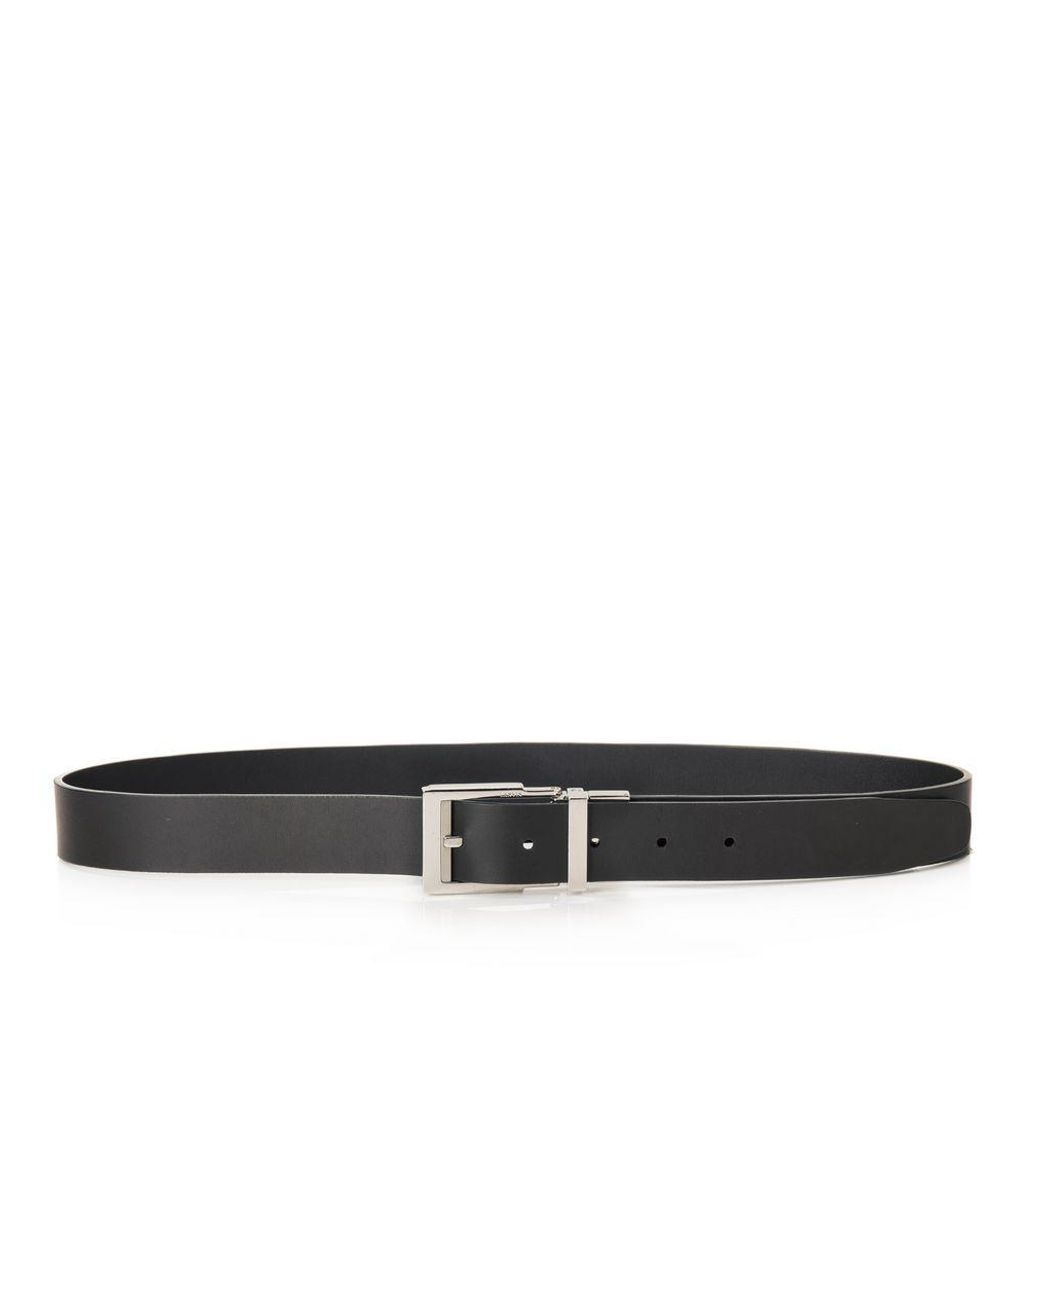 Lyst - Lanvin Belt in Black for Men